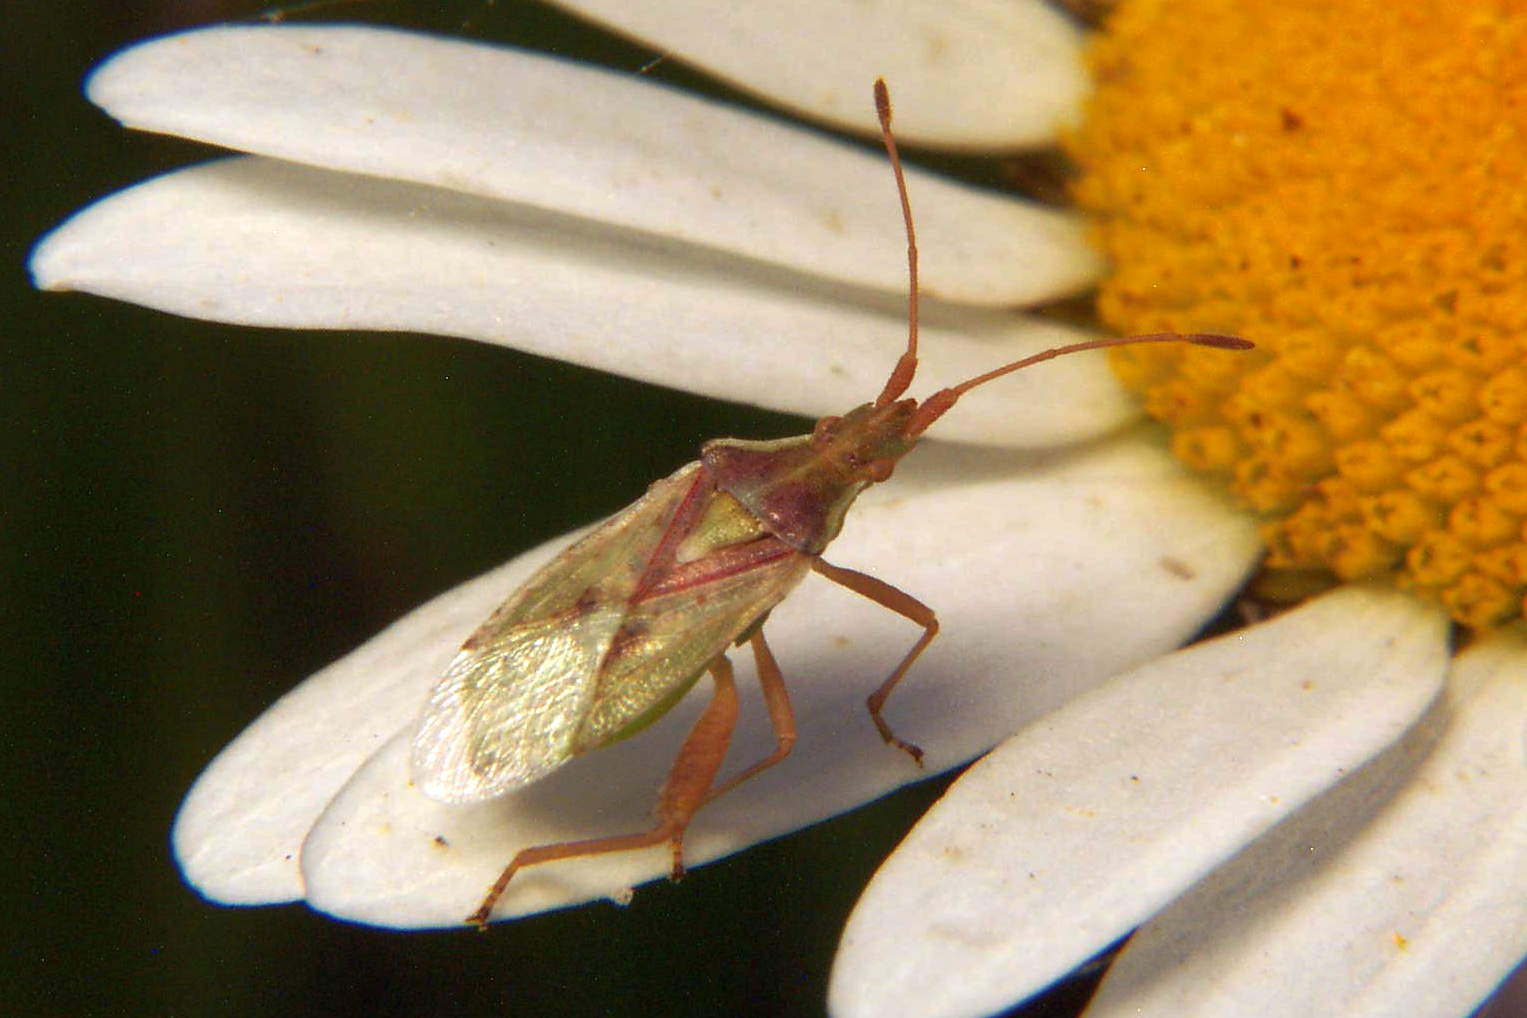 Scentless Plant Bug - Harmostes species